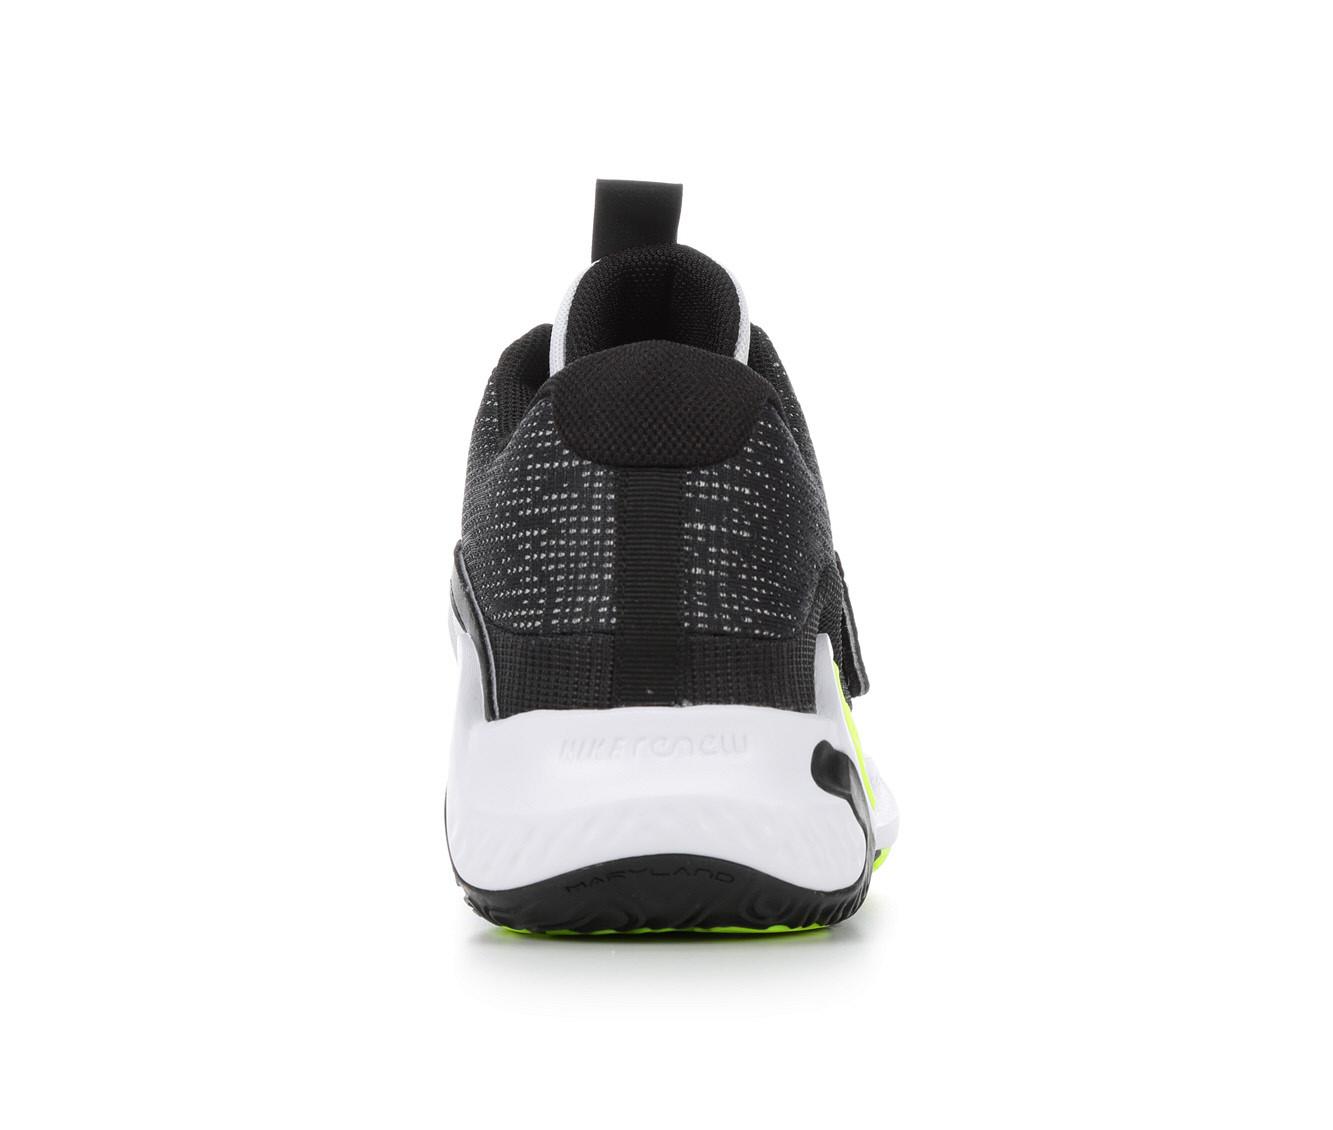 Men's Nike KD Trey 5 X Basketball Shoes | Shoe Carnival